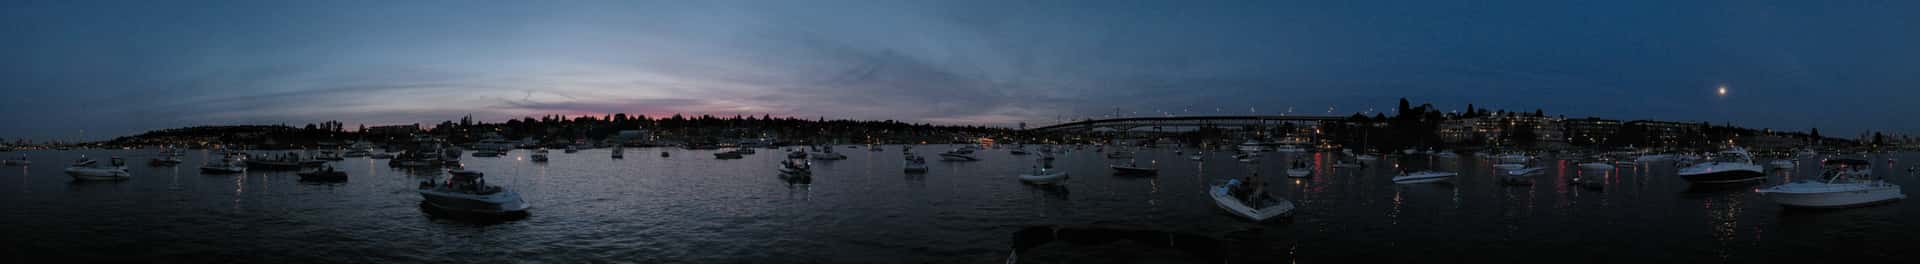 boats awaiting fireworks on Lake Union